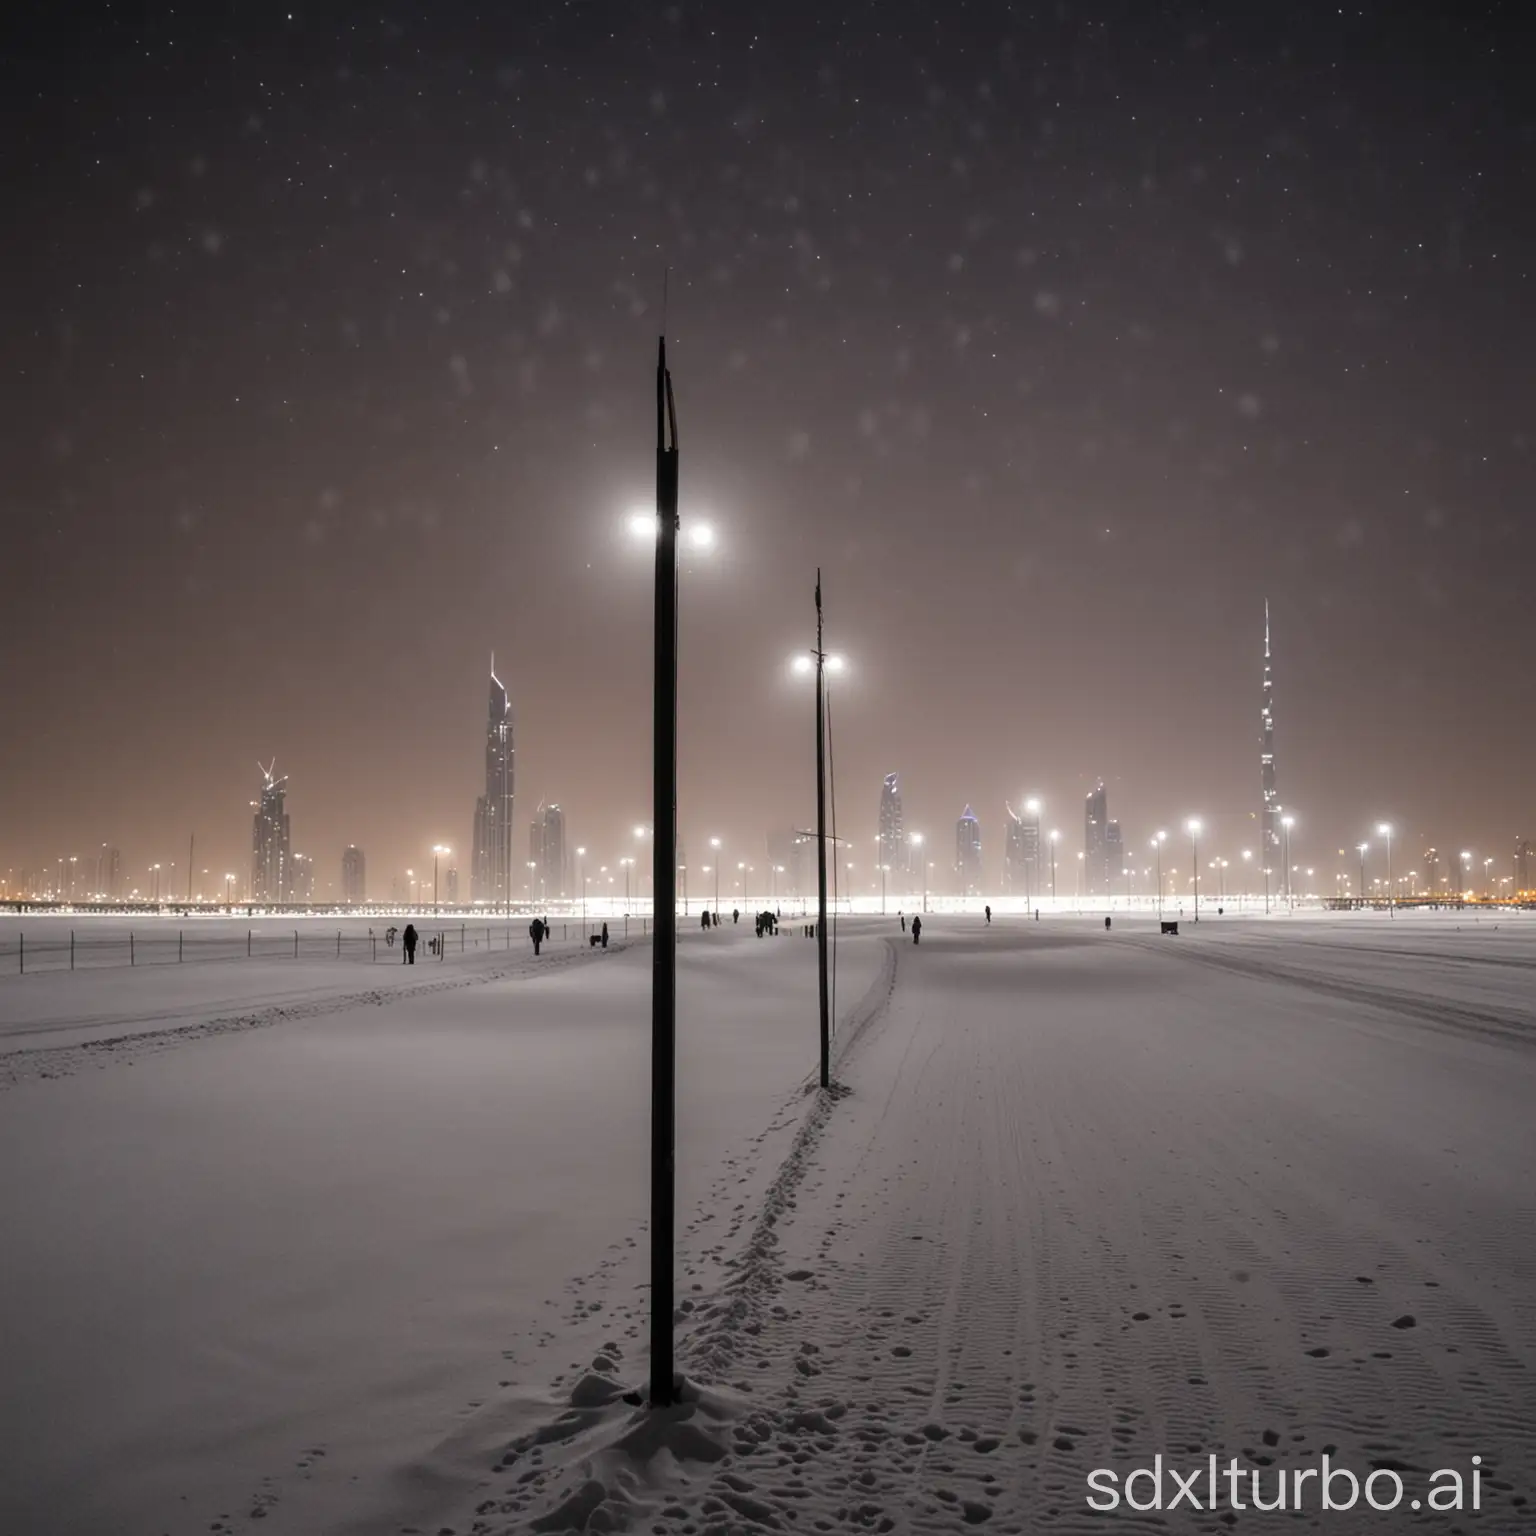 Dubai illuminated at night with meters-high snow